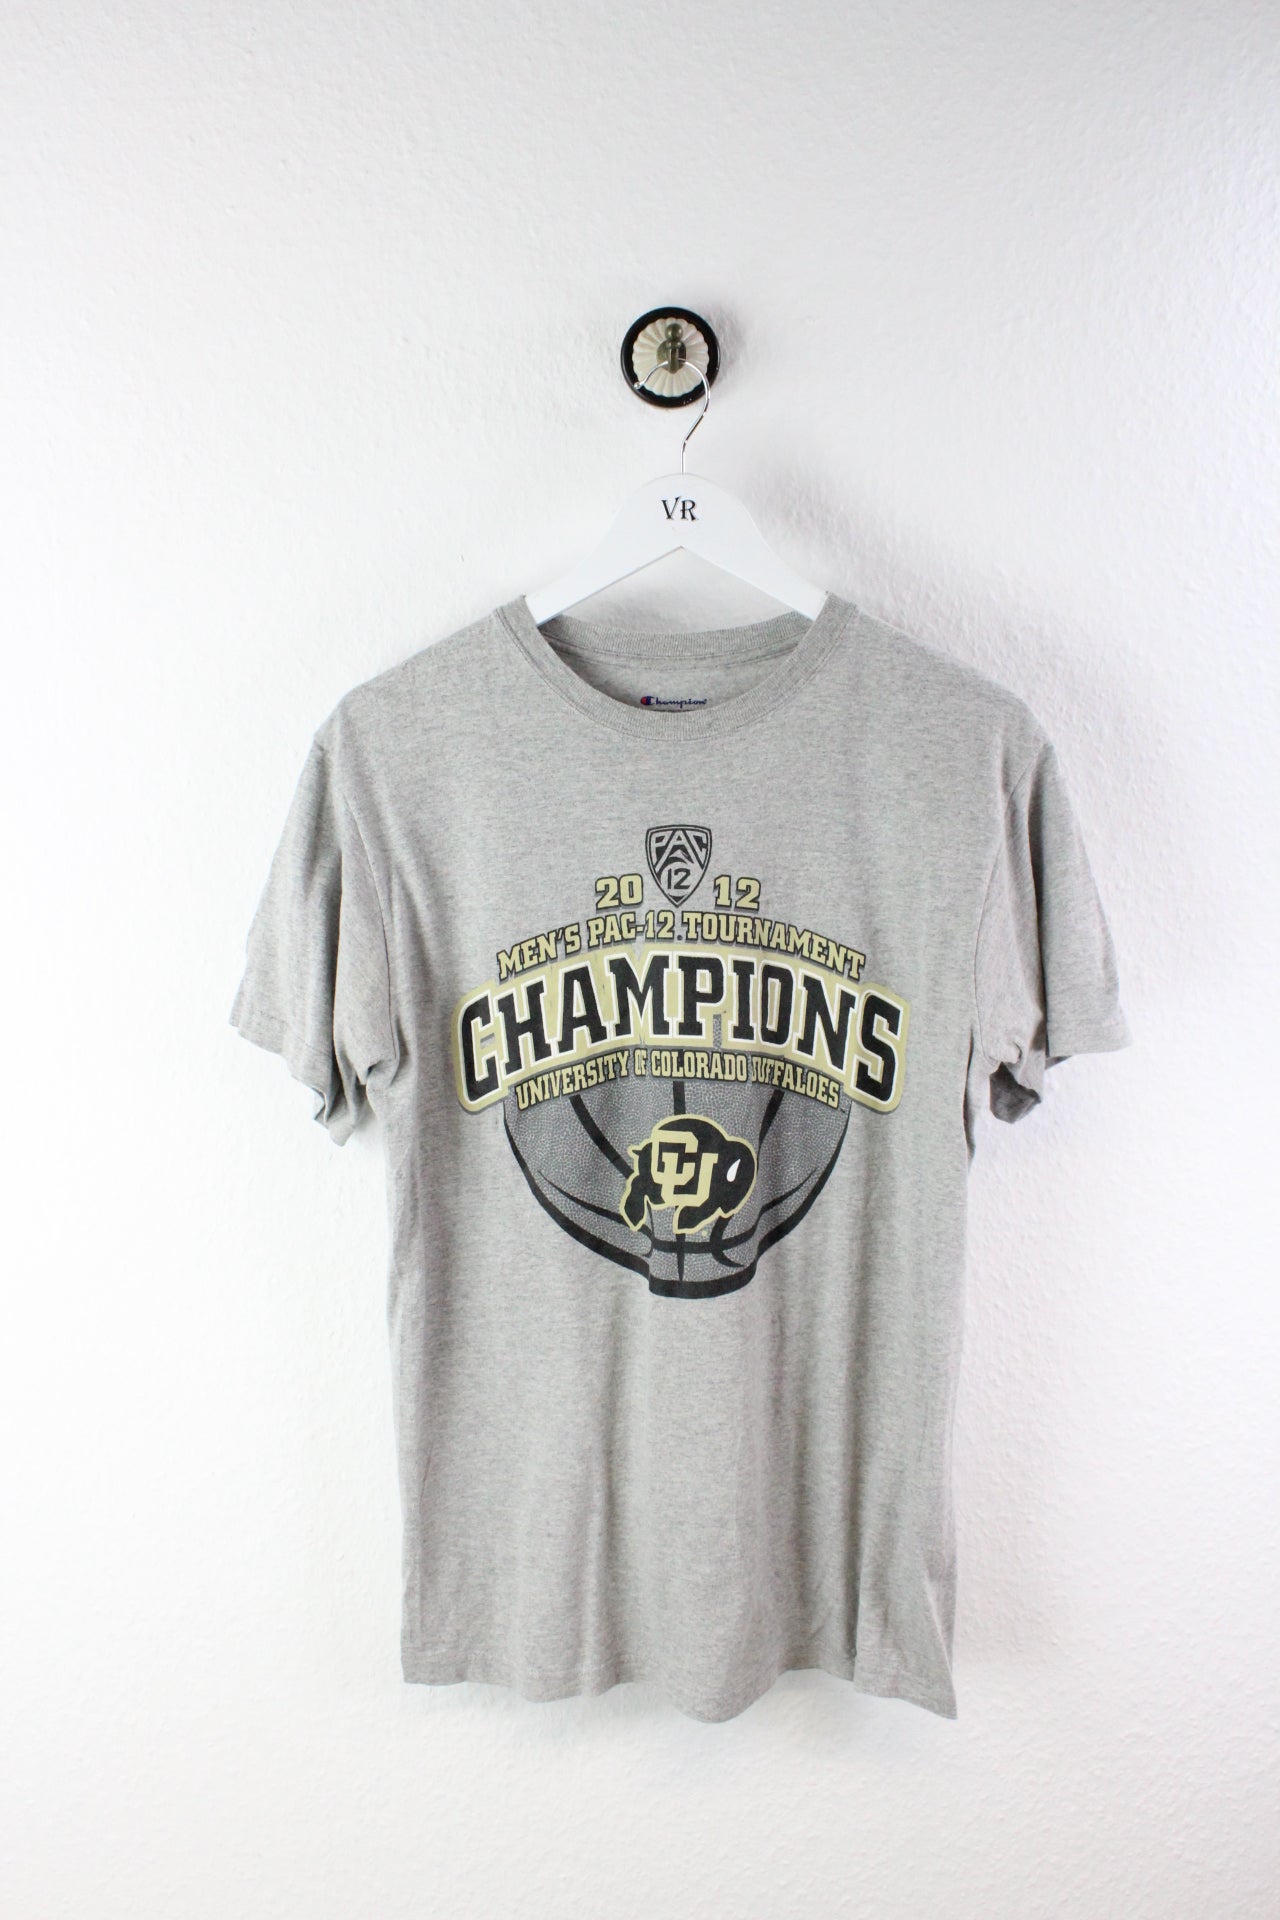 Vintage Champions Buffalloes T-Shirt (M)